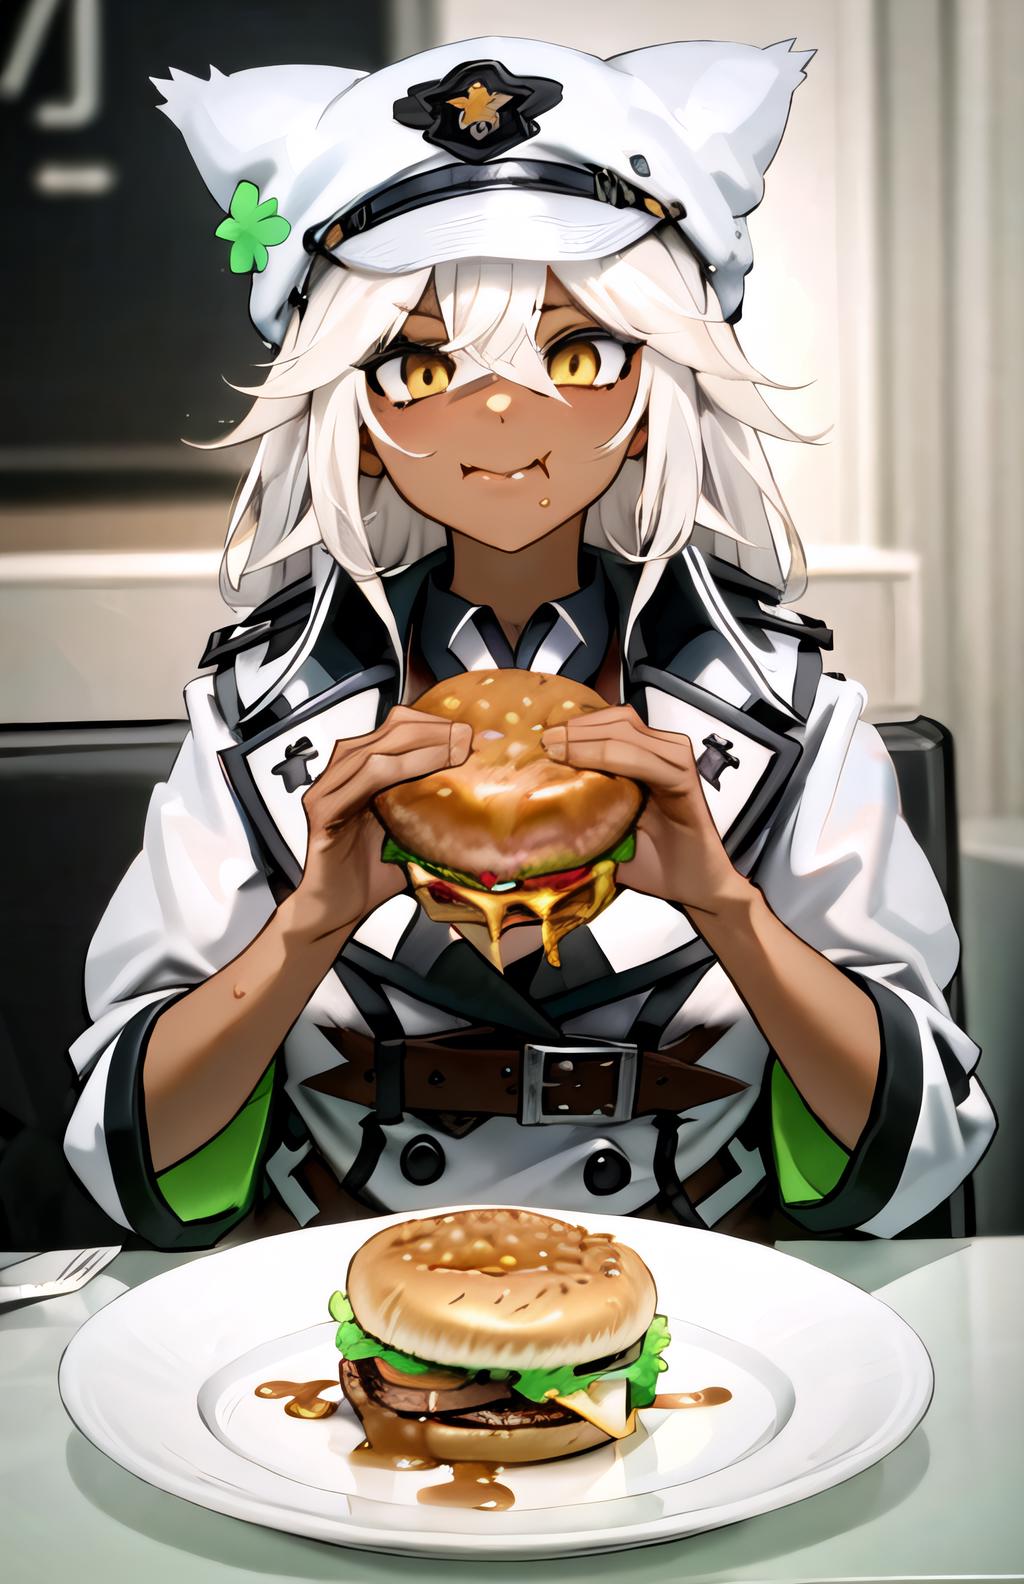 Eating a hamburger image by LOS_FORRY_CUSTOM